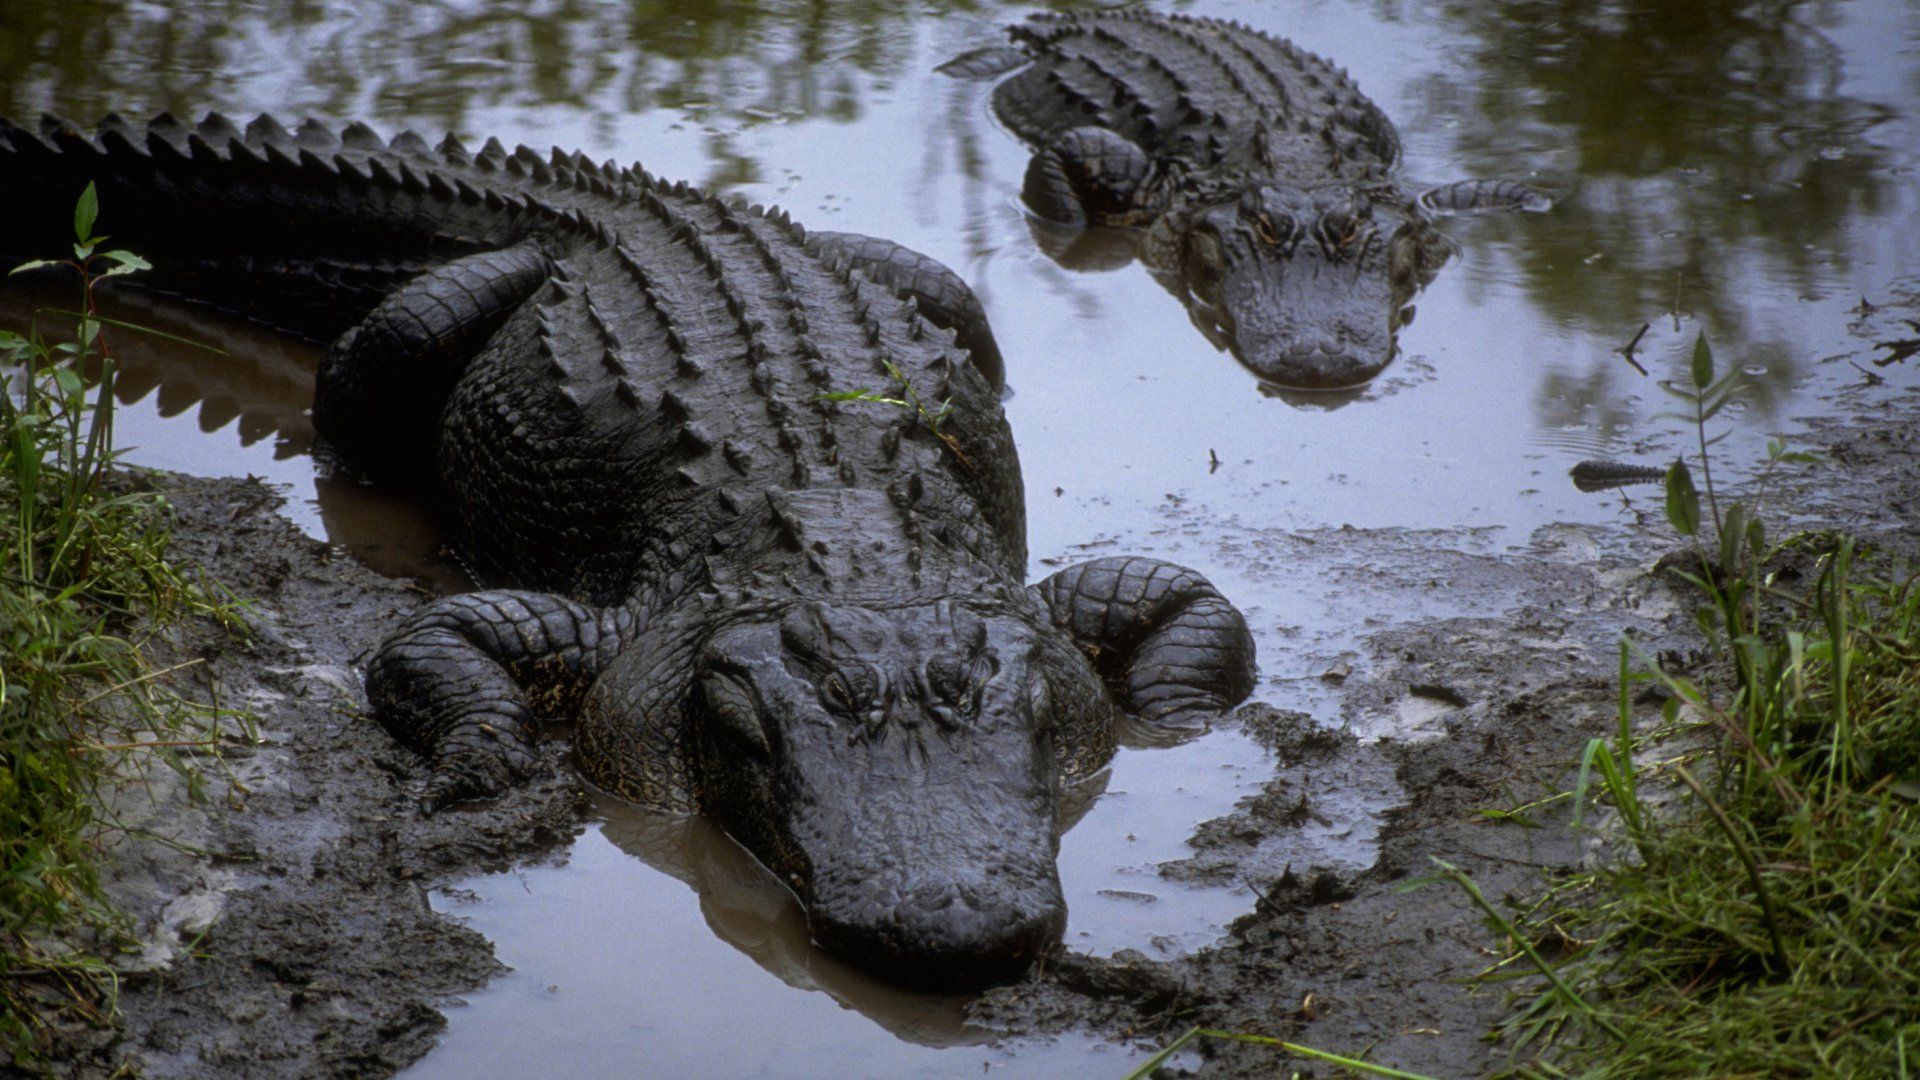 Photos Of The Alligator And Crocodile